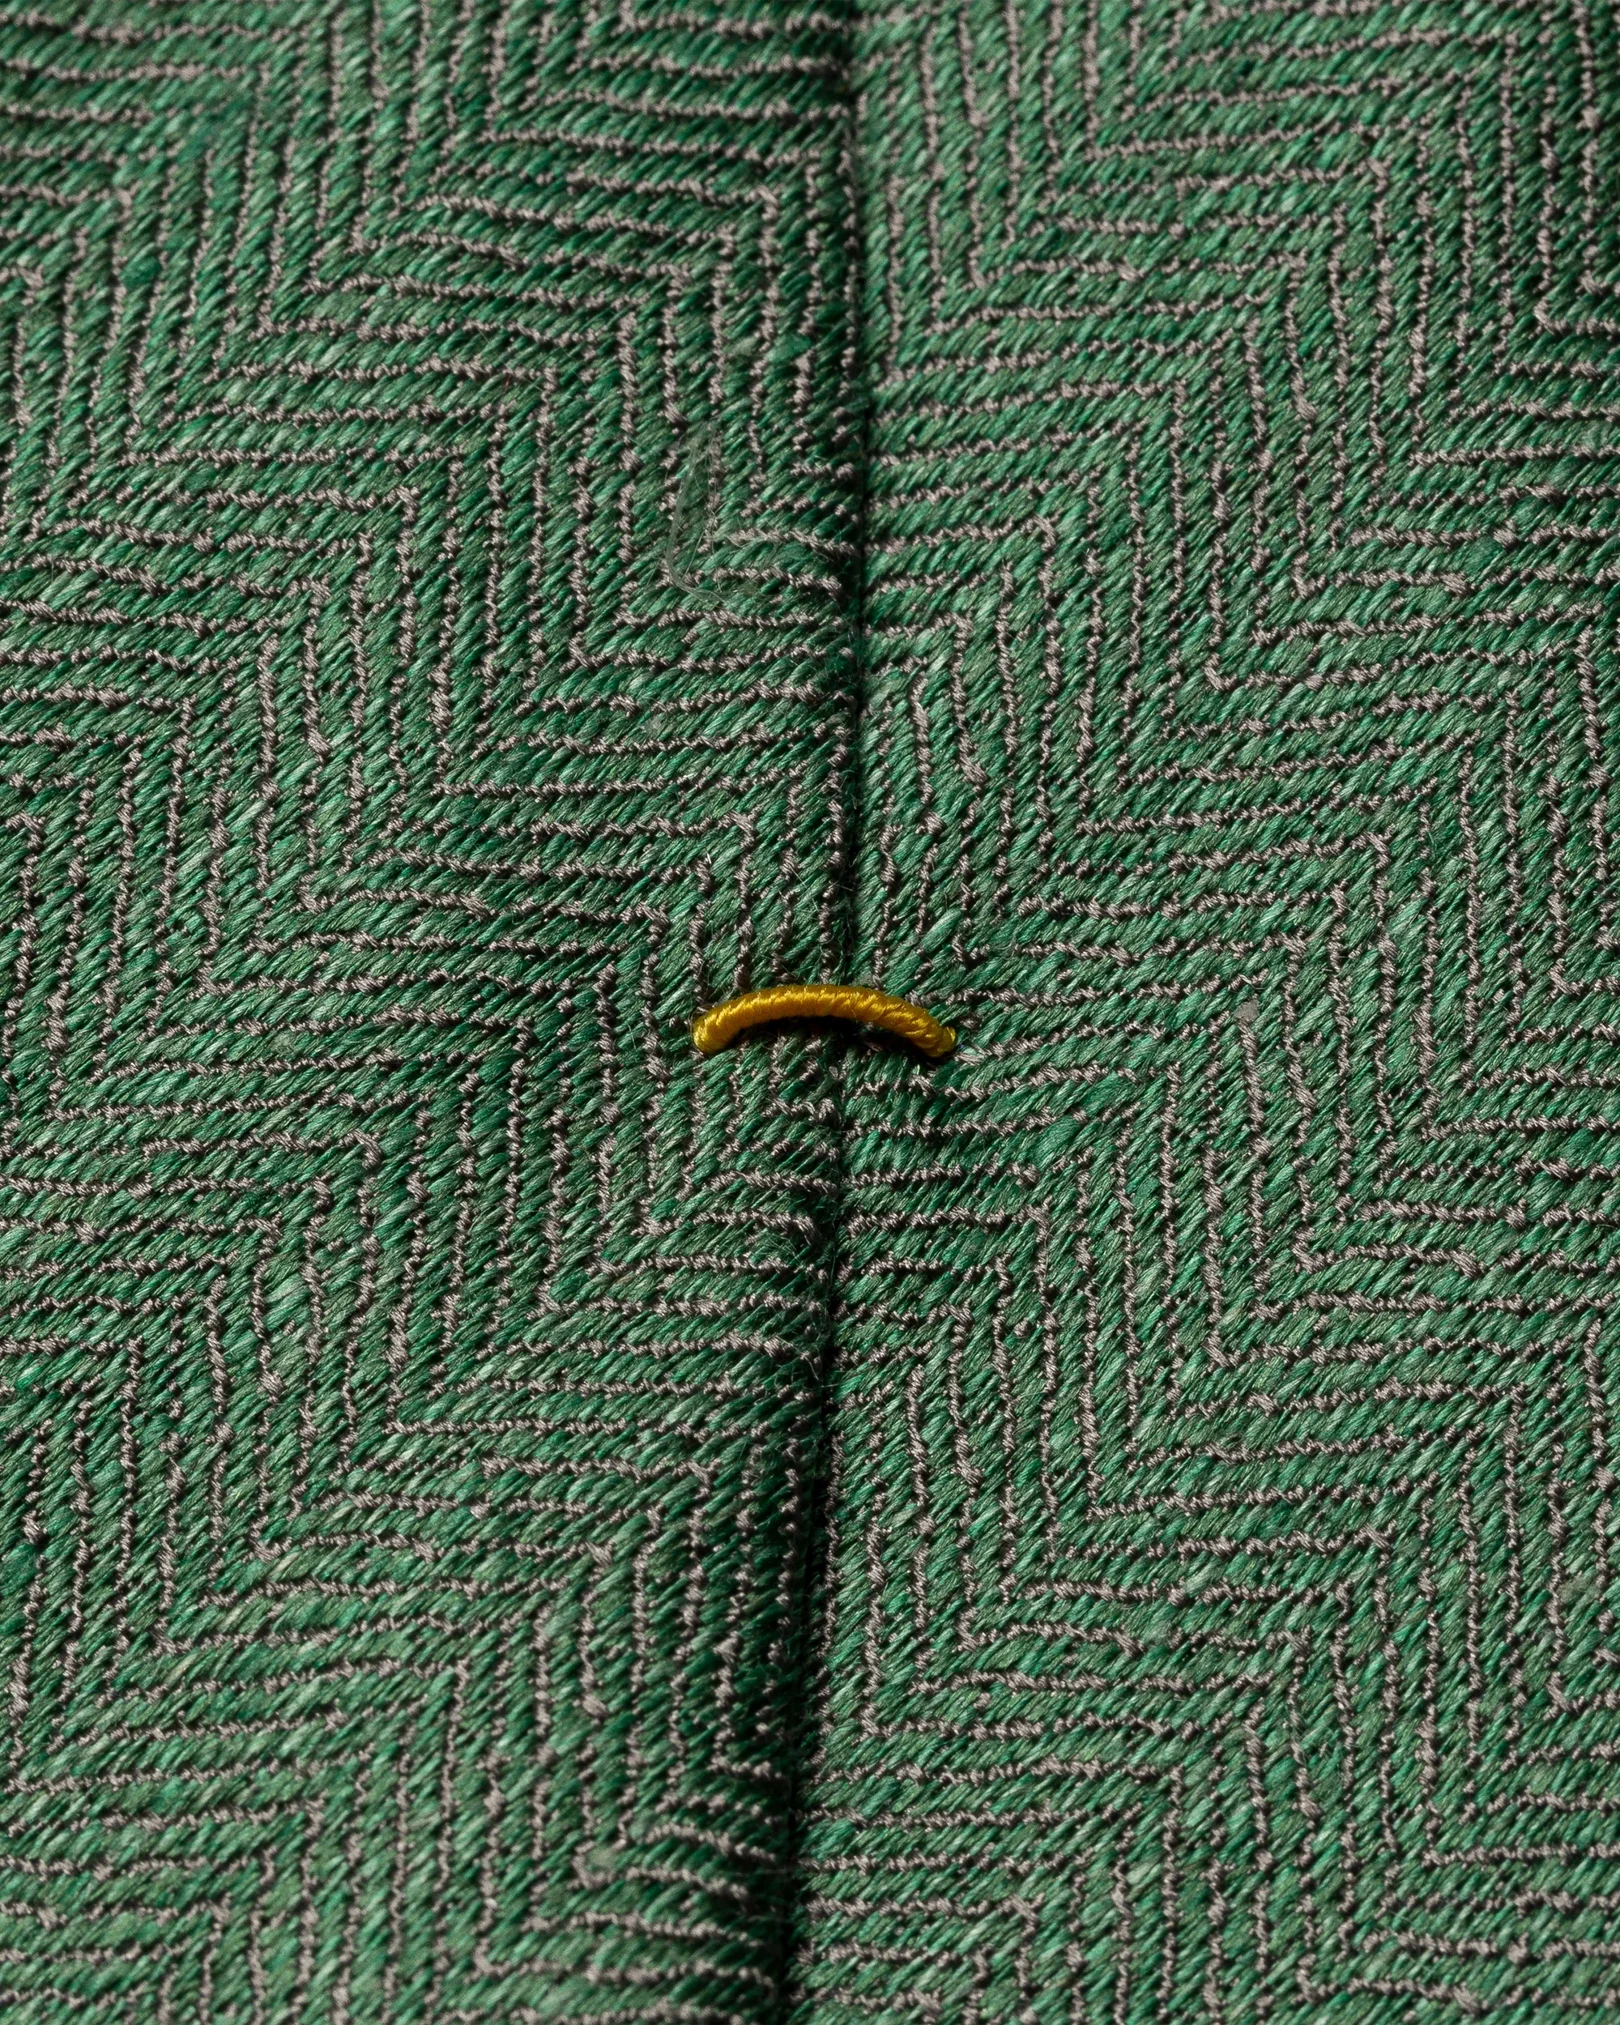 Eton - green herringbone silk linen tie